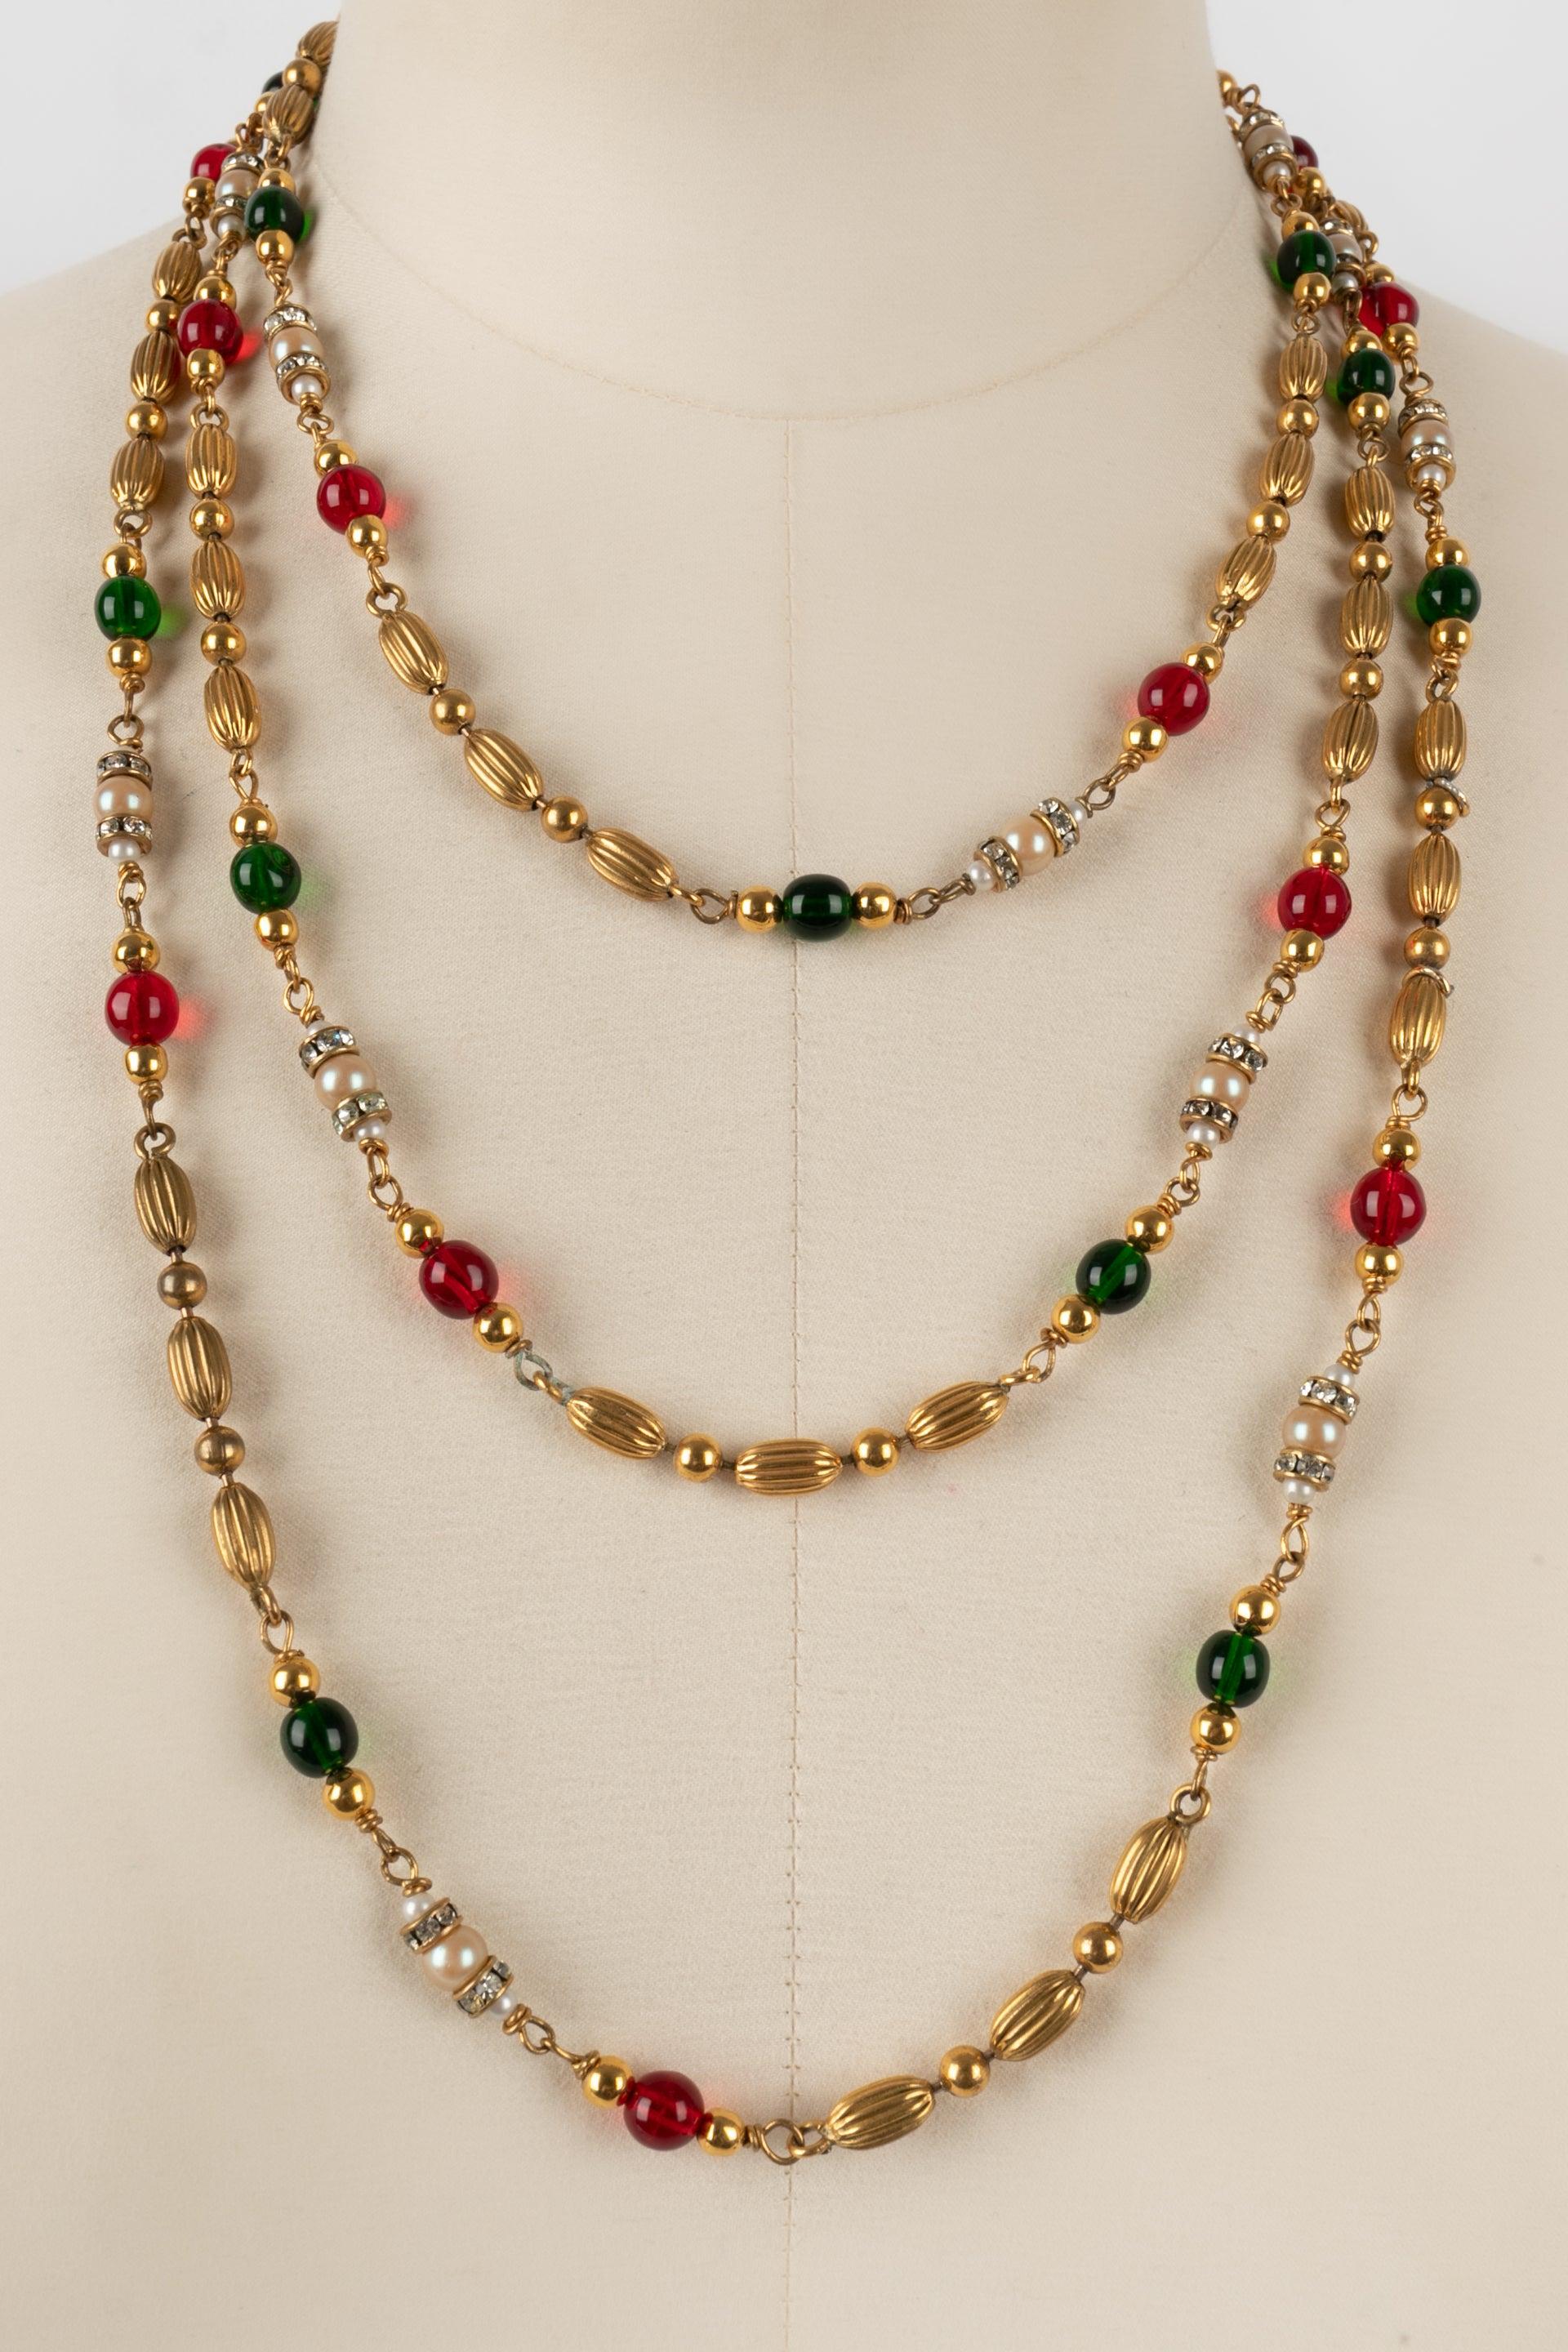 Women's Chanel Golden Metal Sautoir with Metallic & Glass Pearls, Rhinestones Necklace For Sale